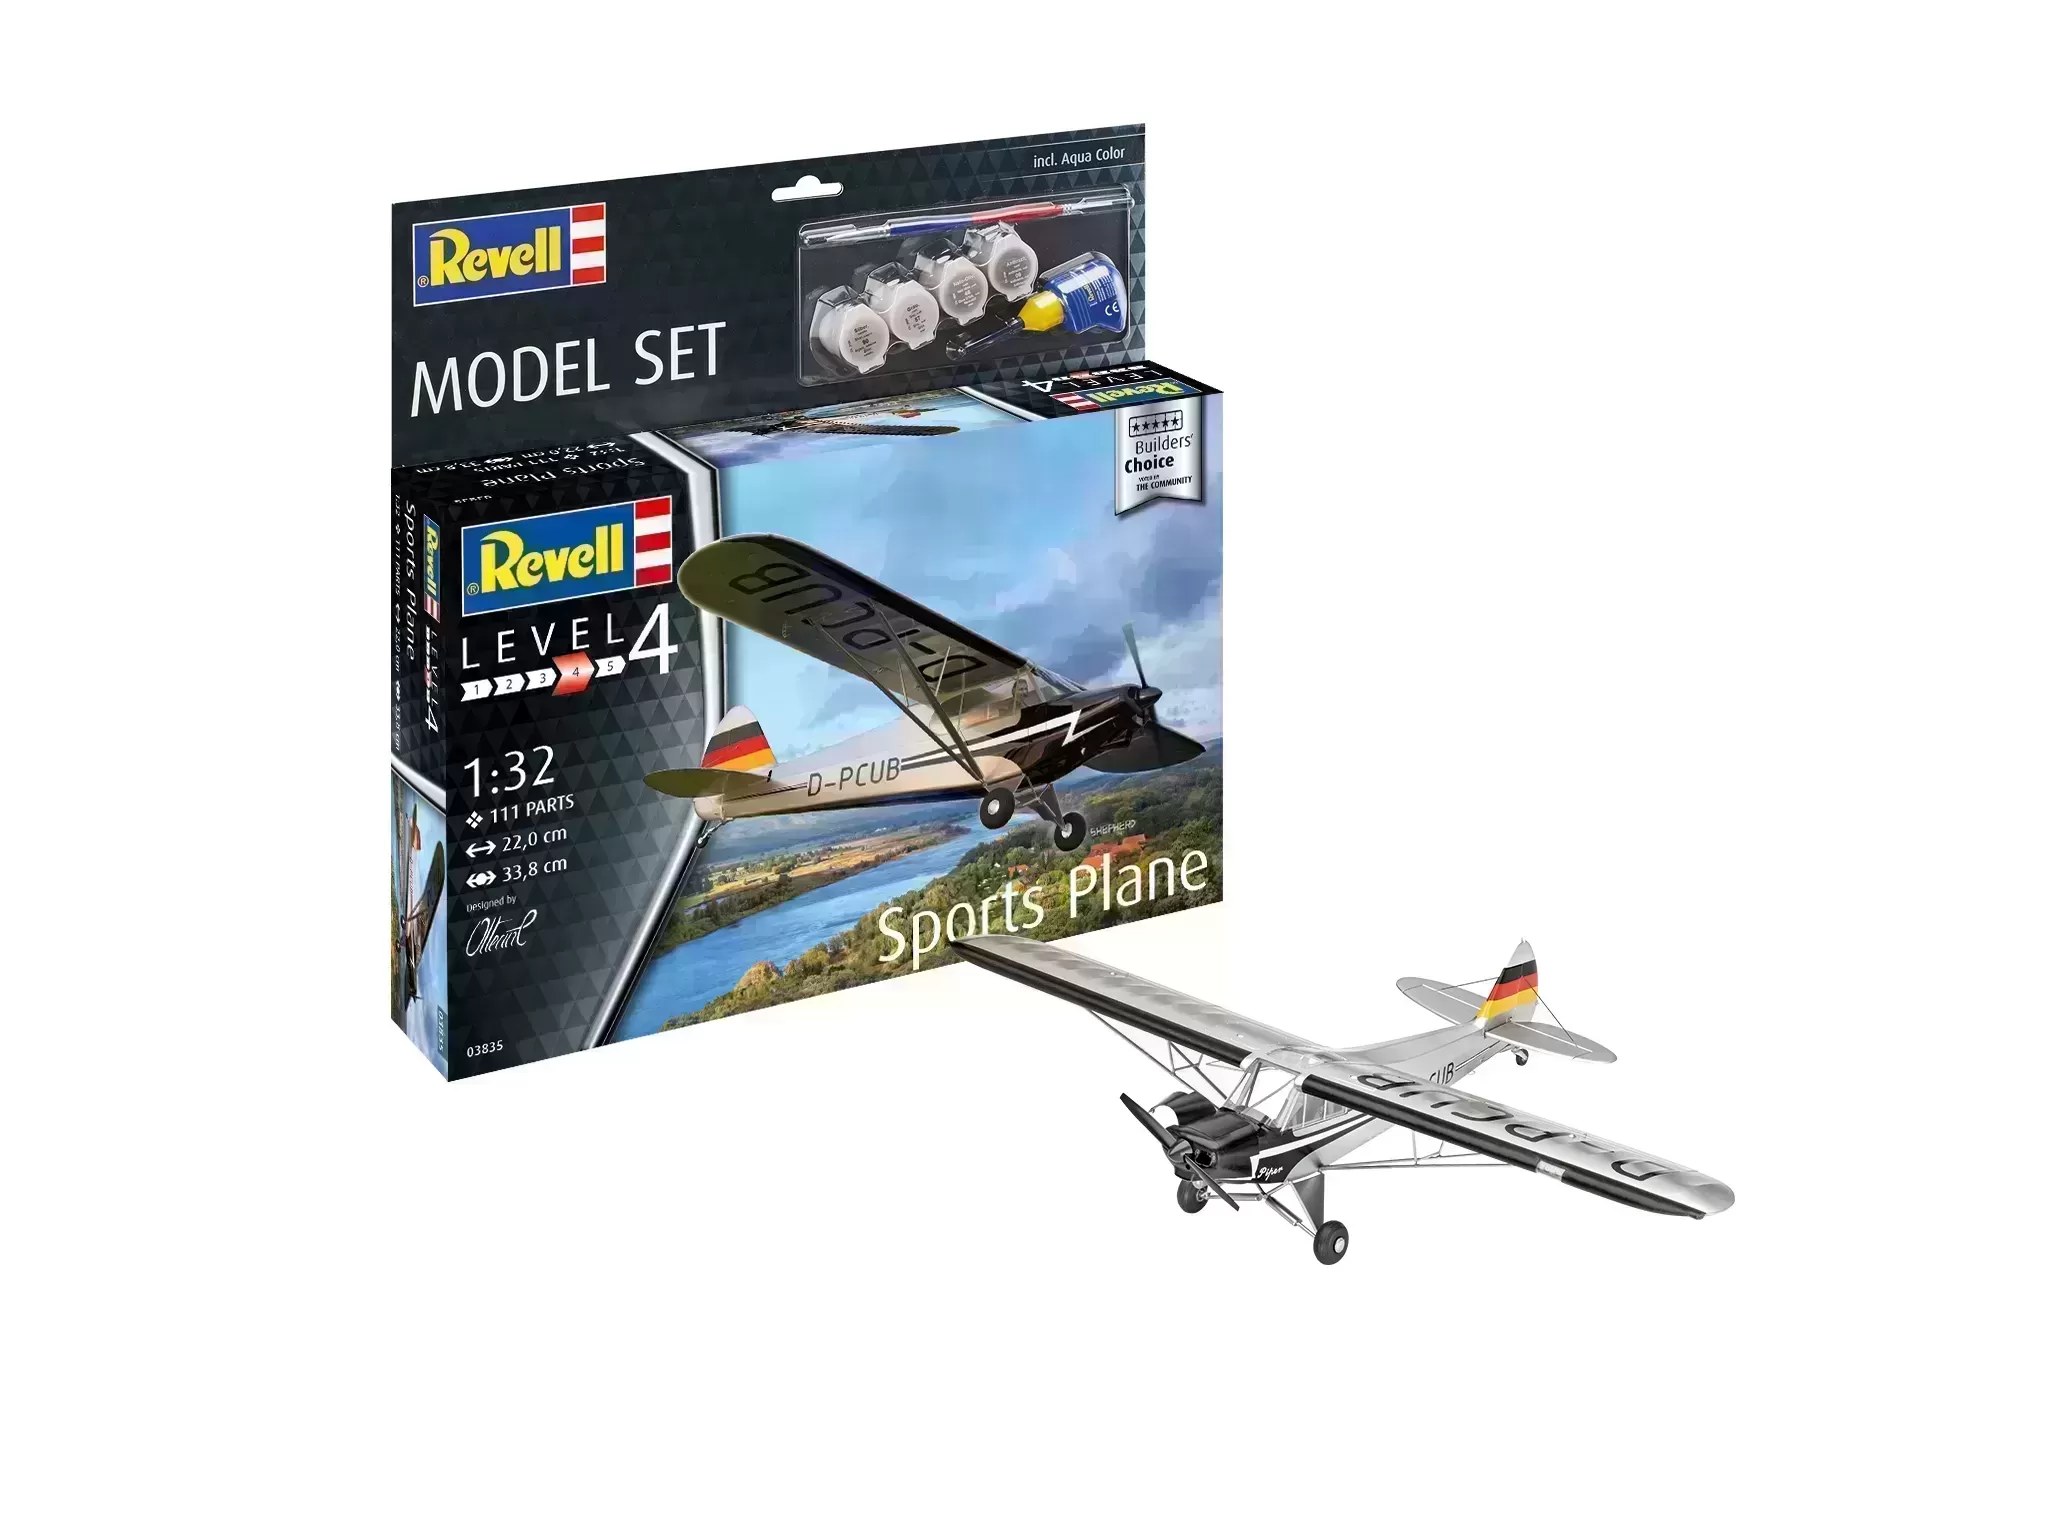 Modelset Sports Plane - 1:32